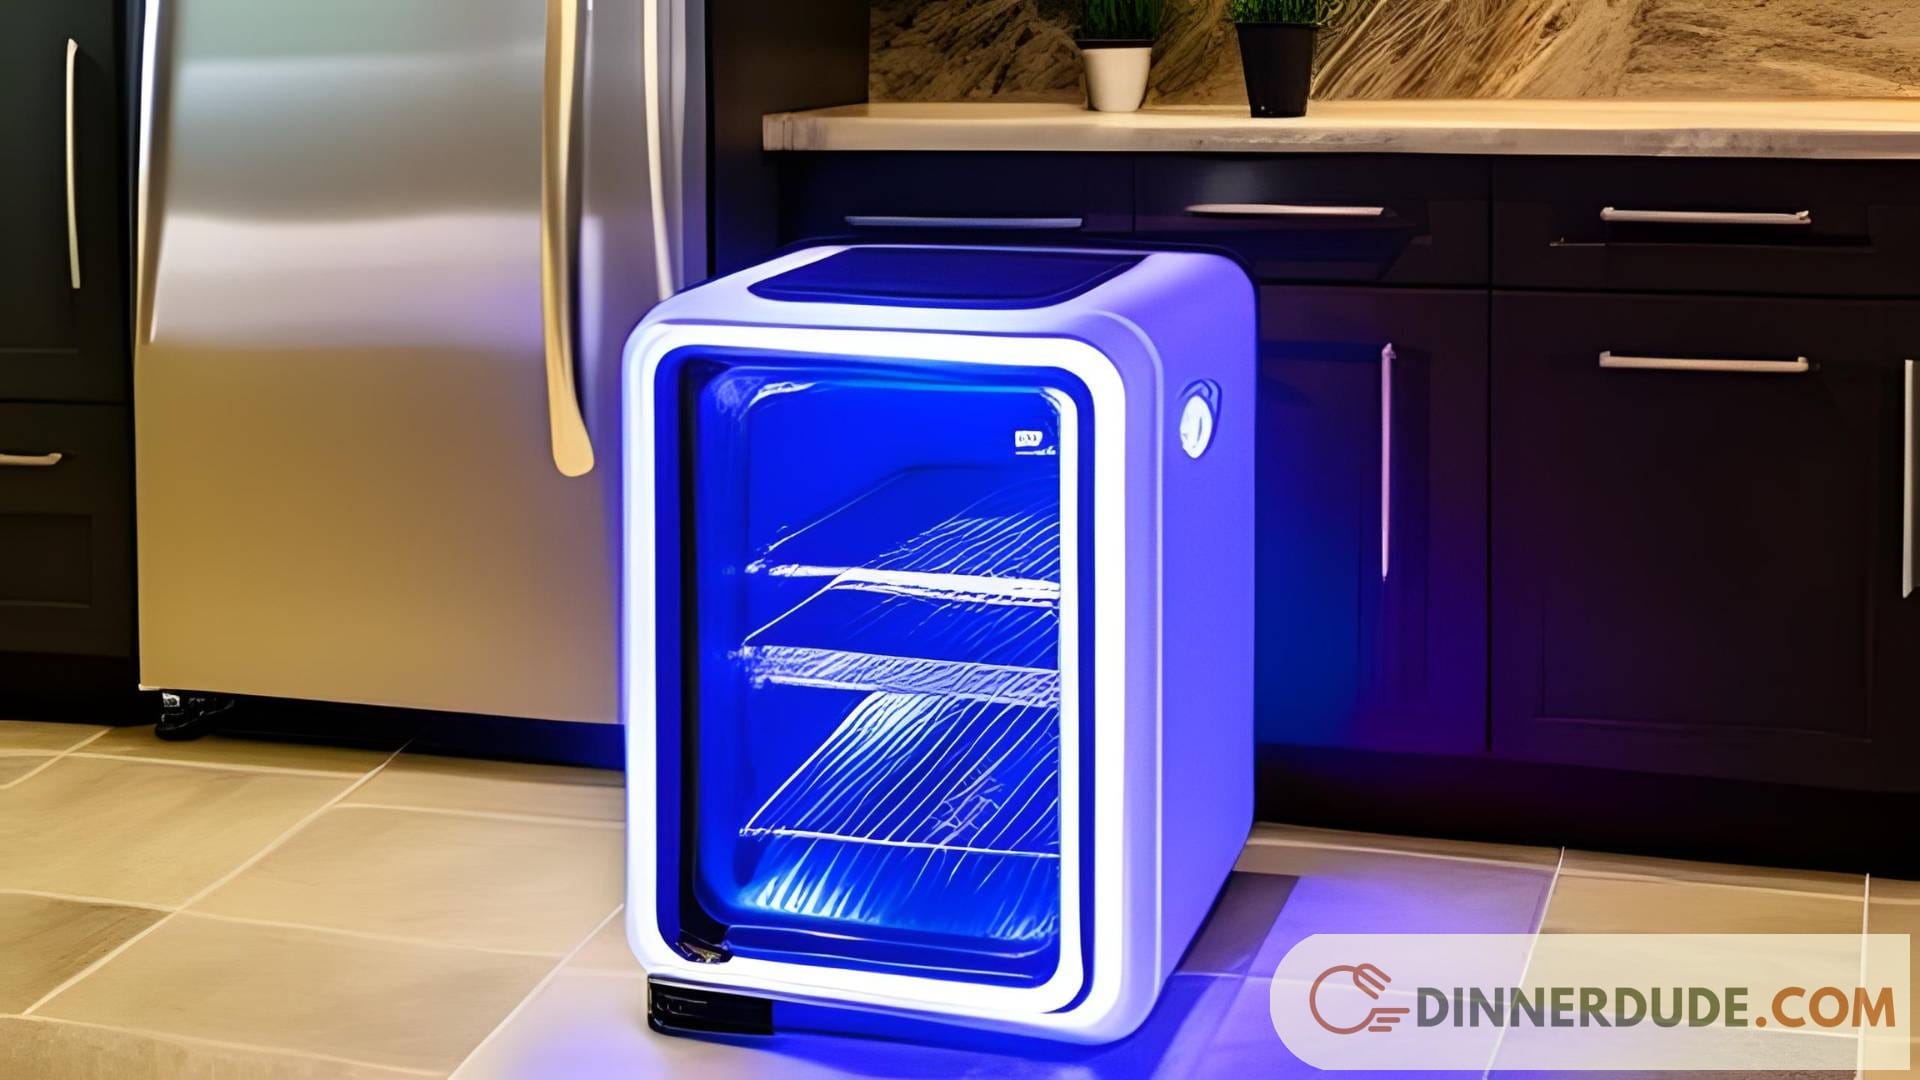 Does a mini fridge need ventilation? - The Dinner Dude